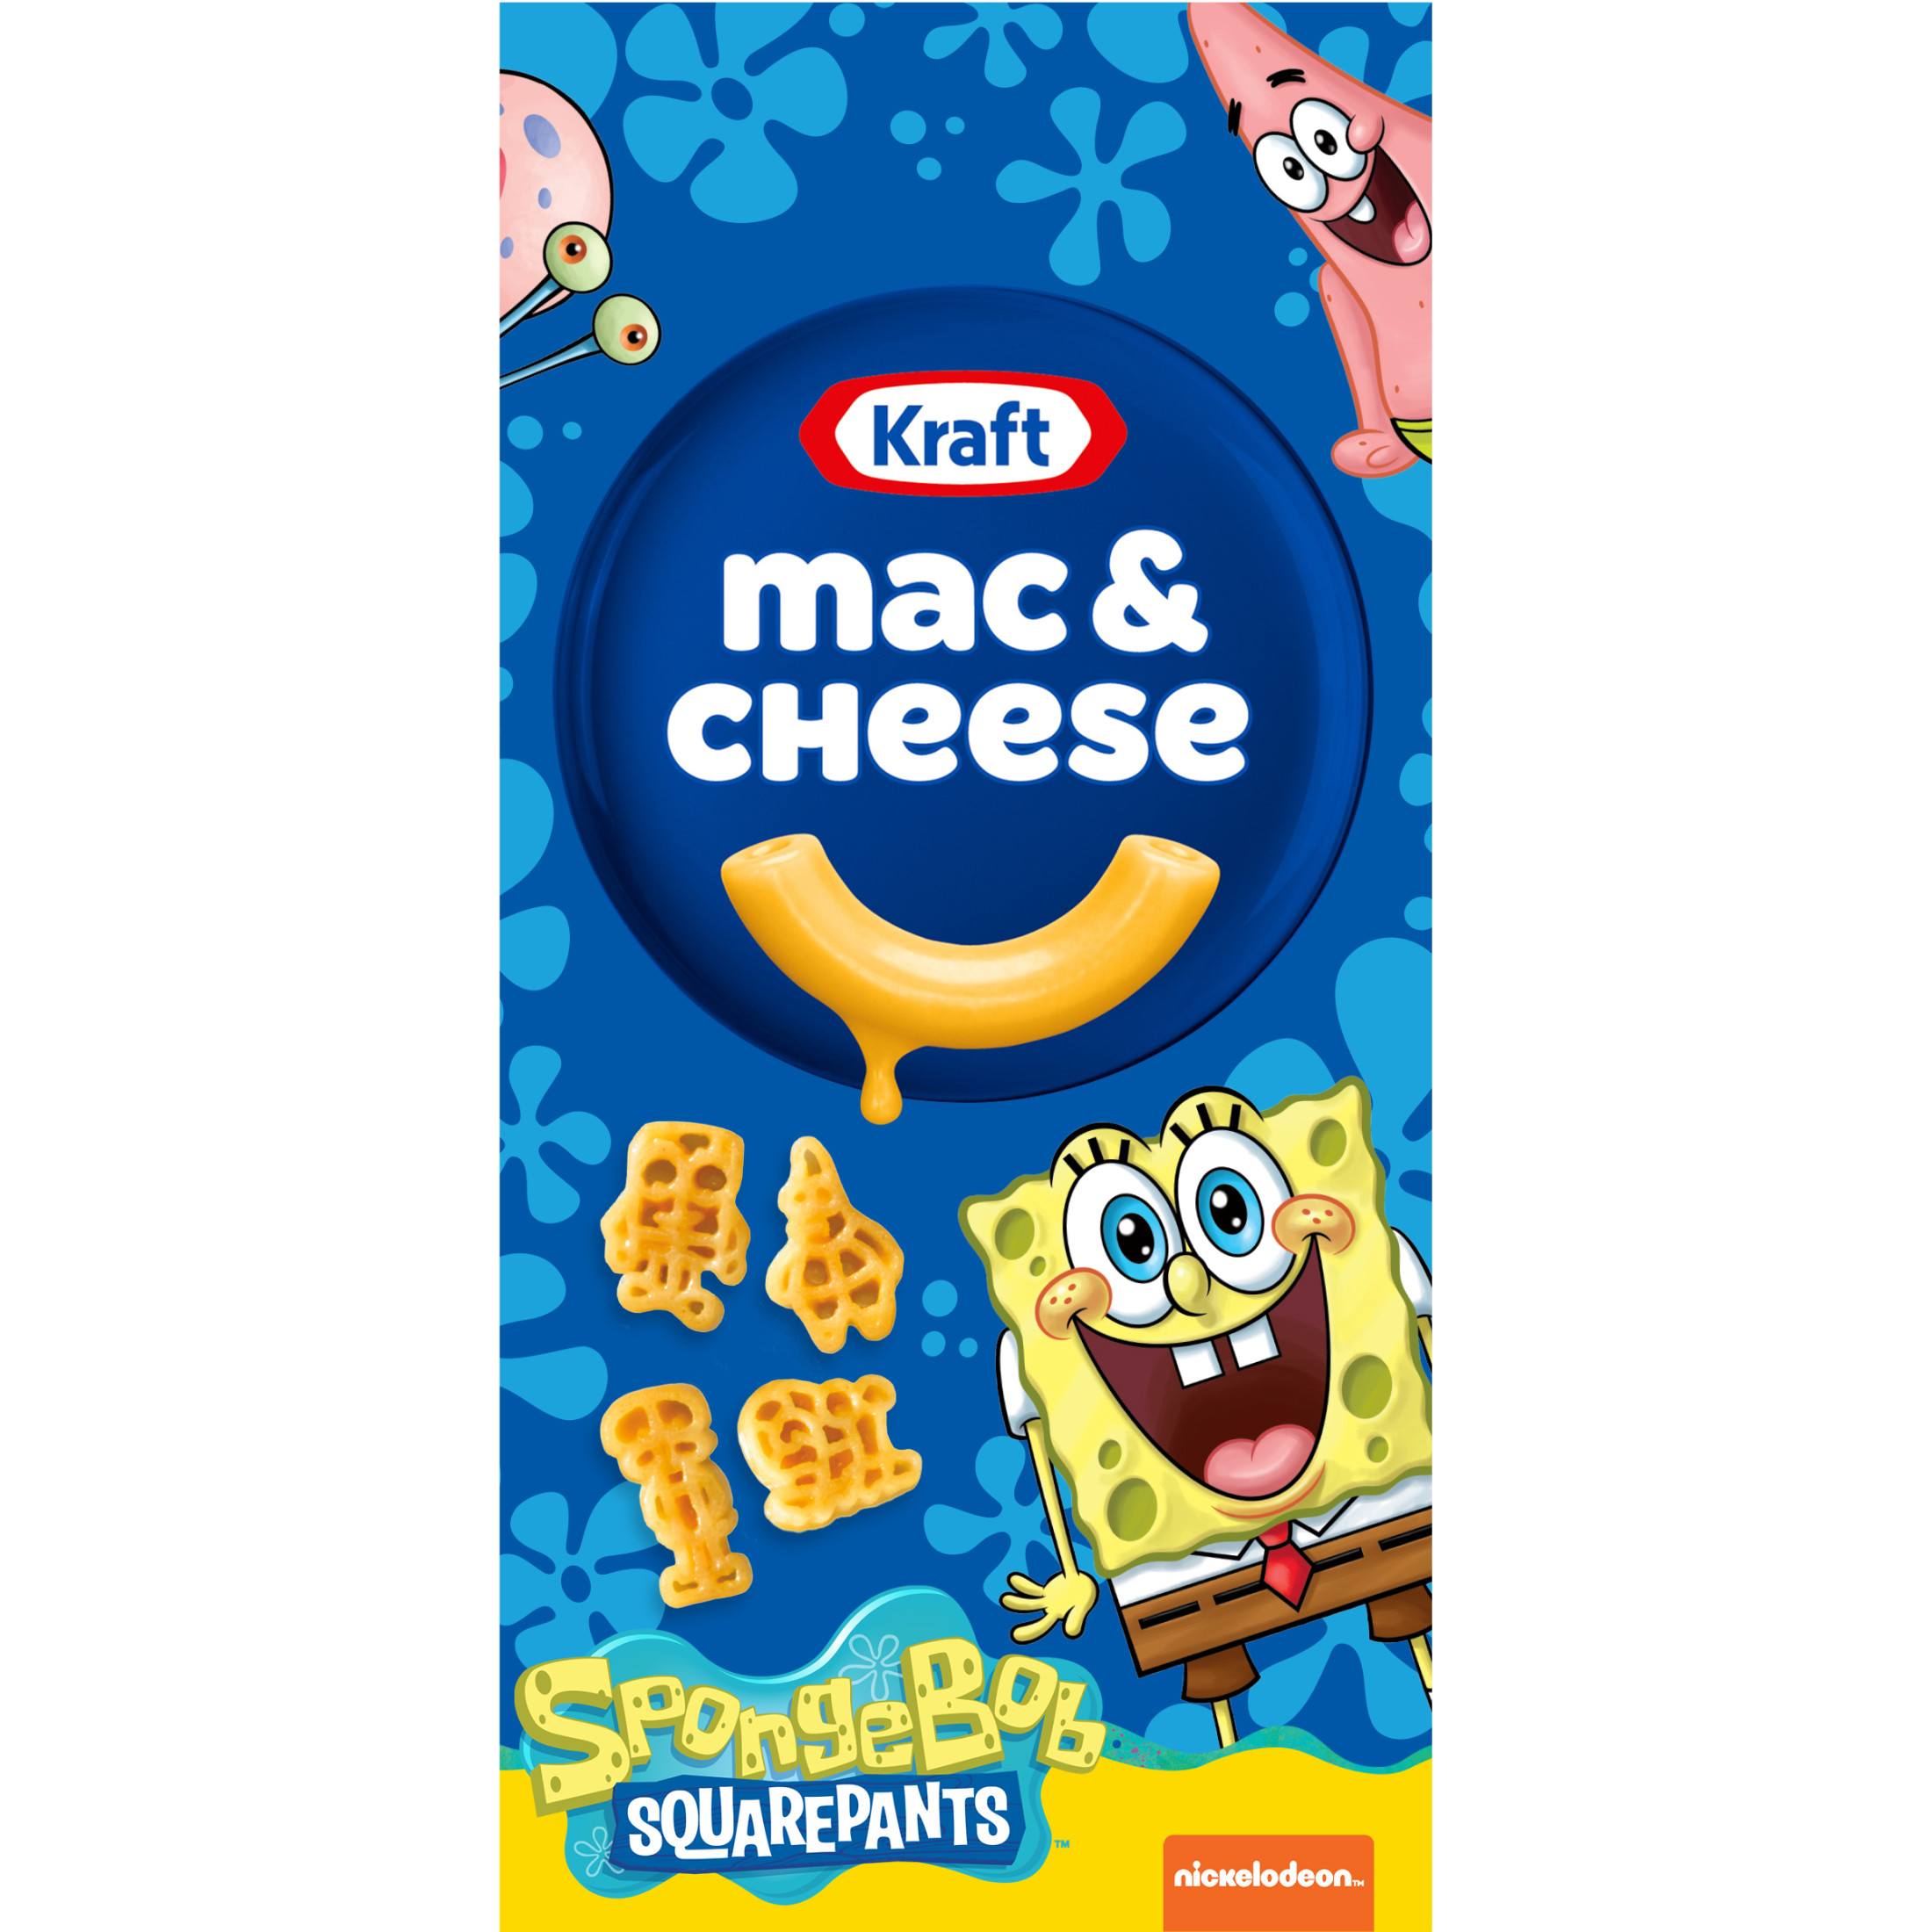 Kraft Mac & Cheese Macaroni and Cheese Dinner SpongeBob SquarePants, 5.5 oz Box - image 1 of 15